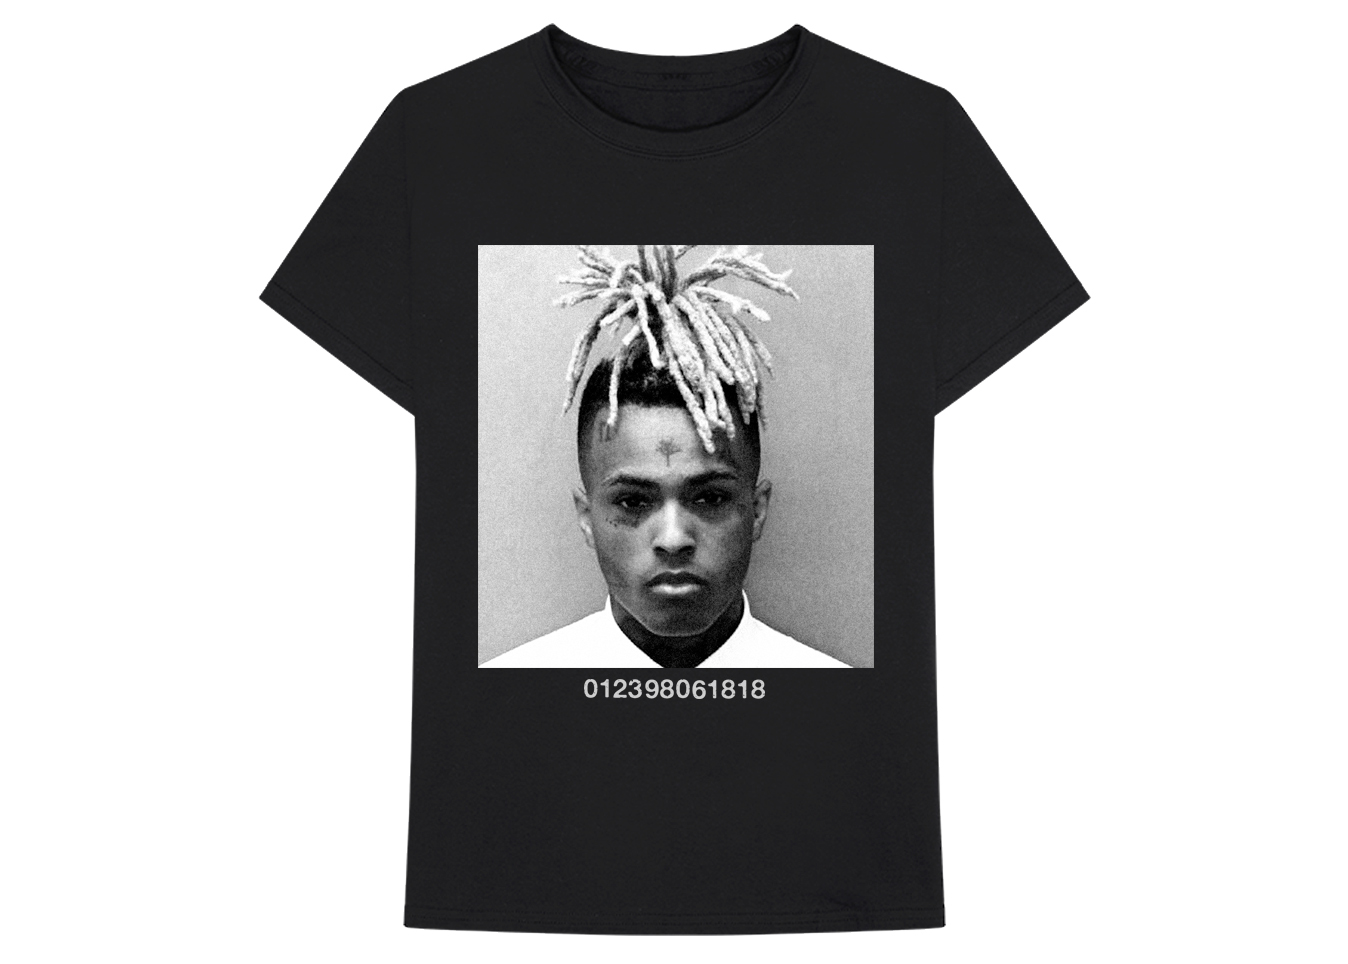 XXXTentacion Mugshot T-shirt Black Men's - 2019 - US